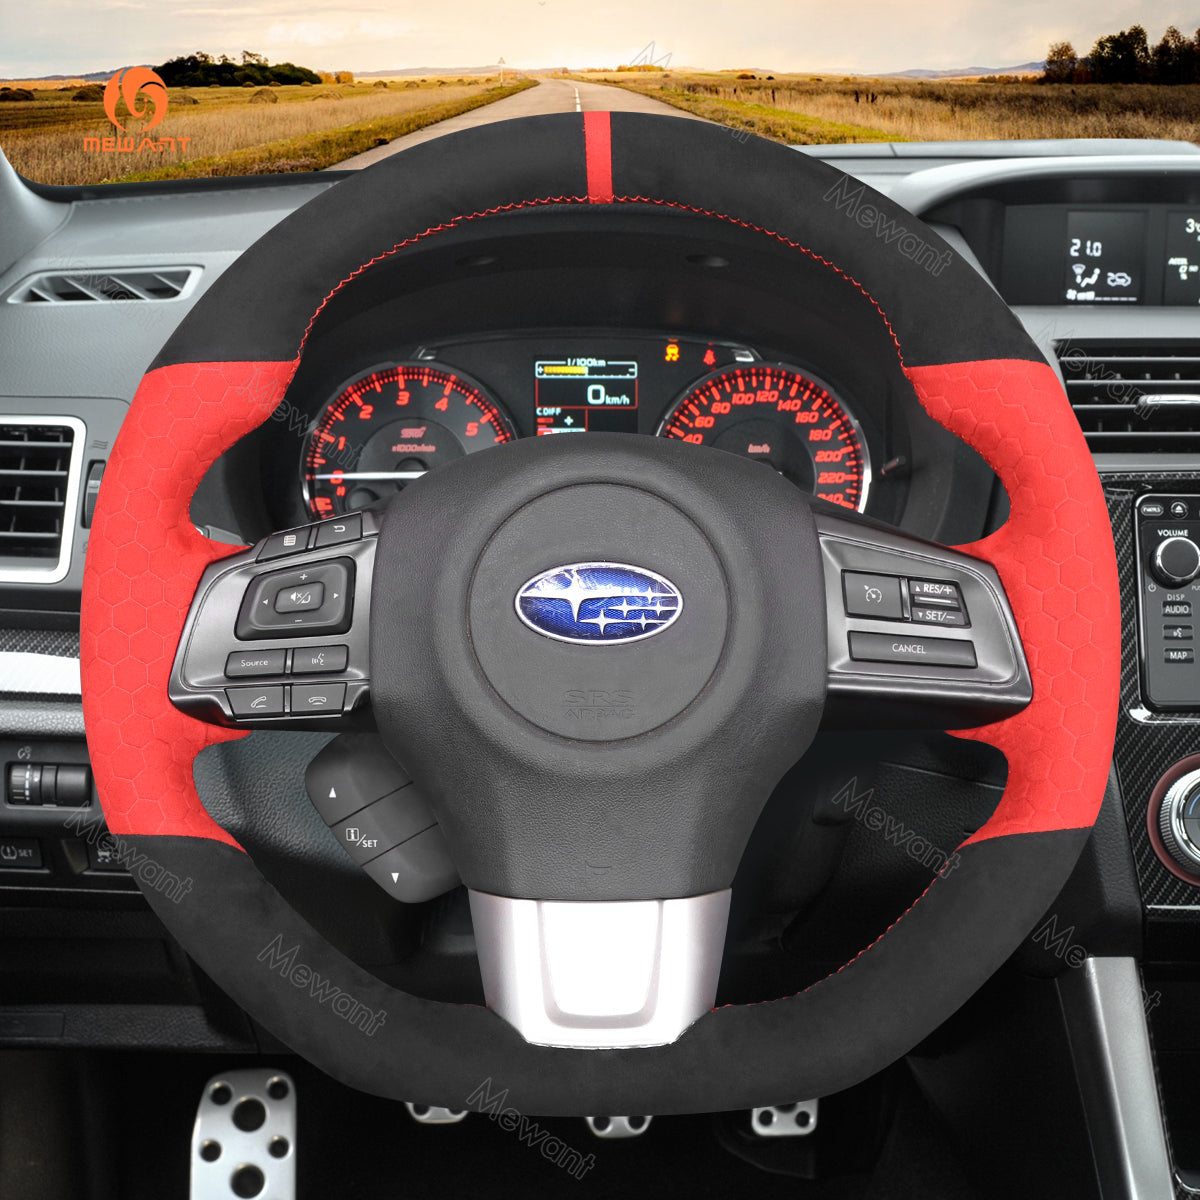 MEWANT Hand Stitch Carbon Fiber Black Leather Suede Car Steering Wheel Cover for Subaru WRX (STI) Levorg 2015-2019